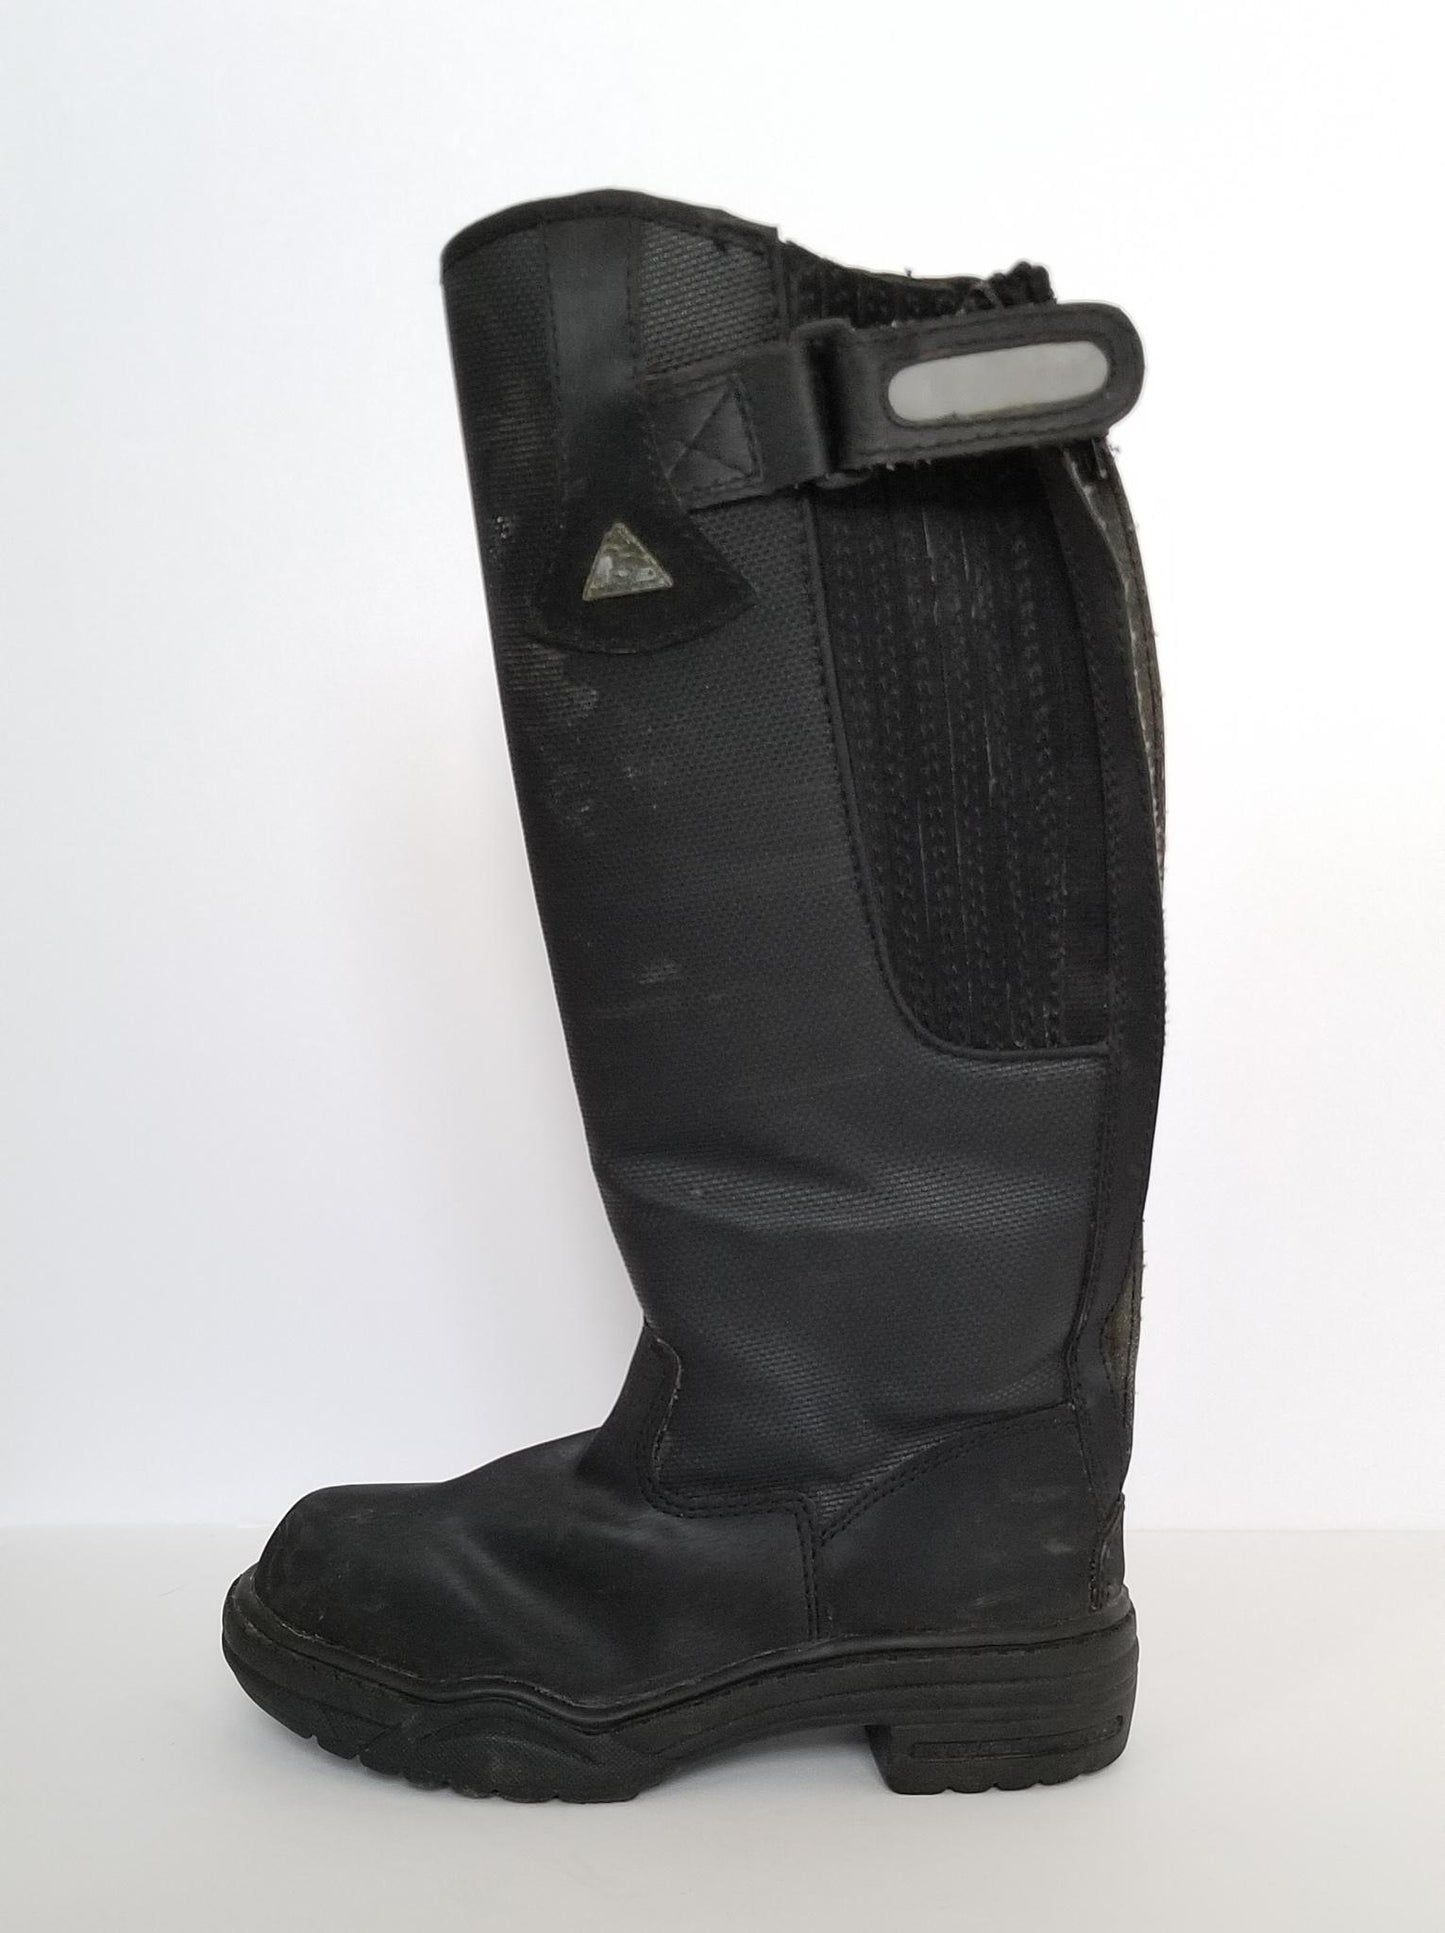 Mountain Horse Rimfrost Winter Tall Boot - Black - Junior Size 1